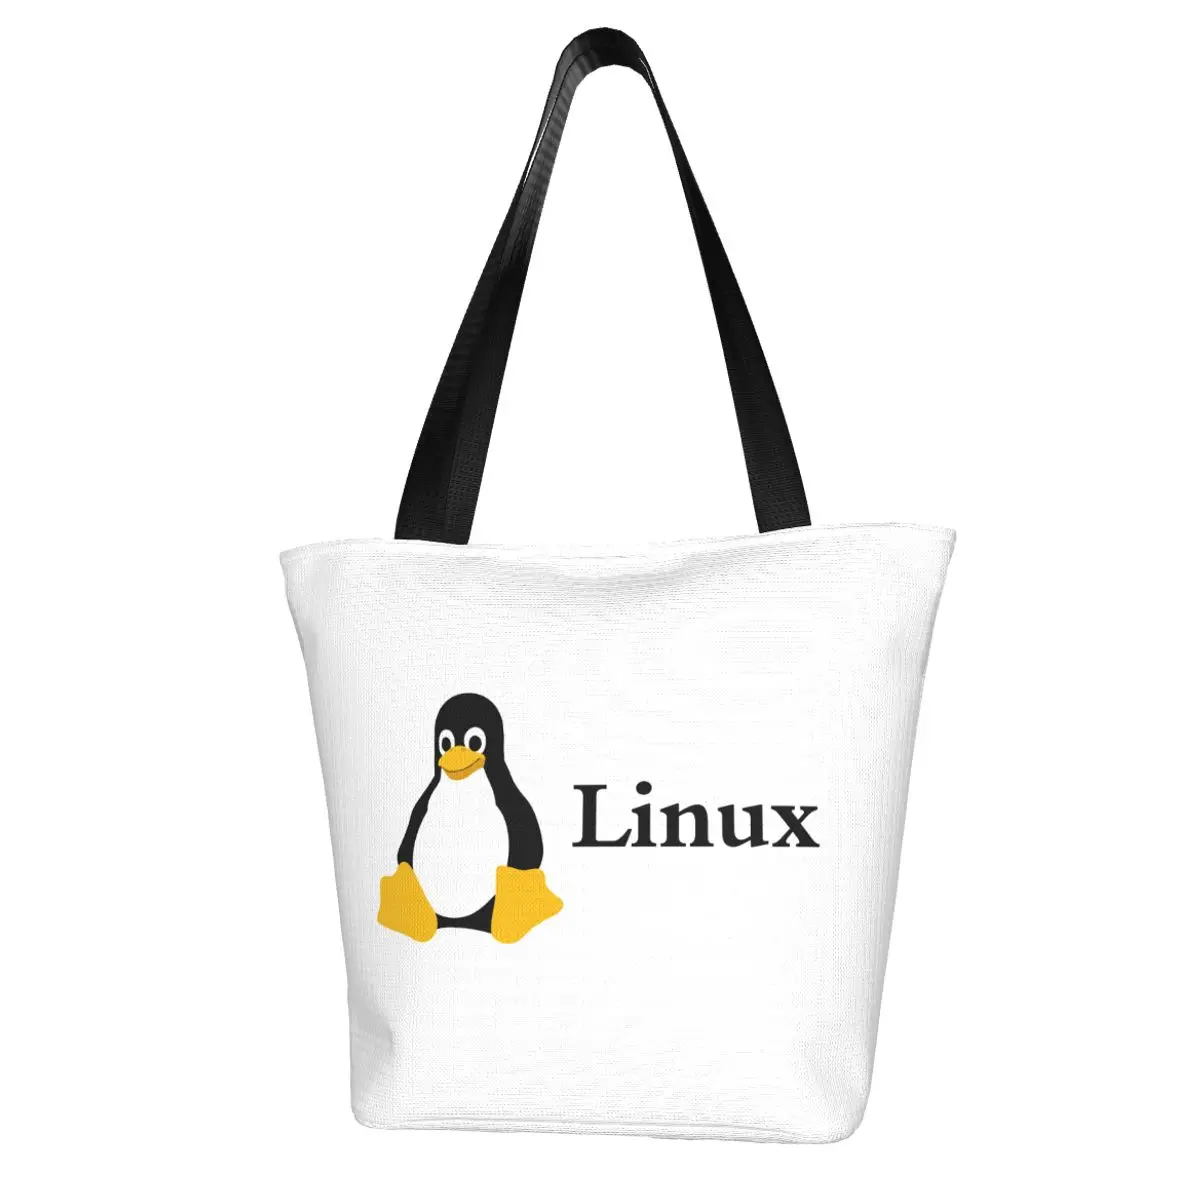 Linux Shopping Bag Aesthetic Cloth Outdoor Handbag Female Fashion Bags